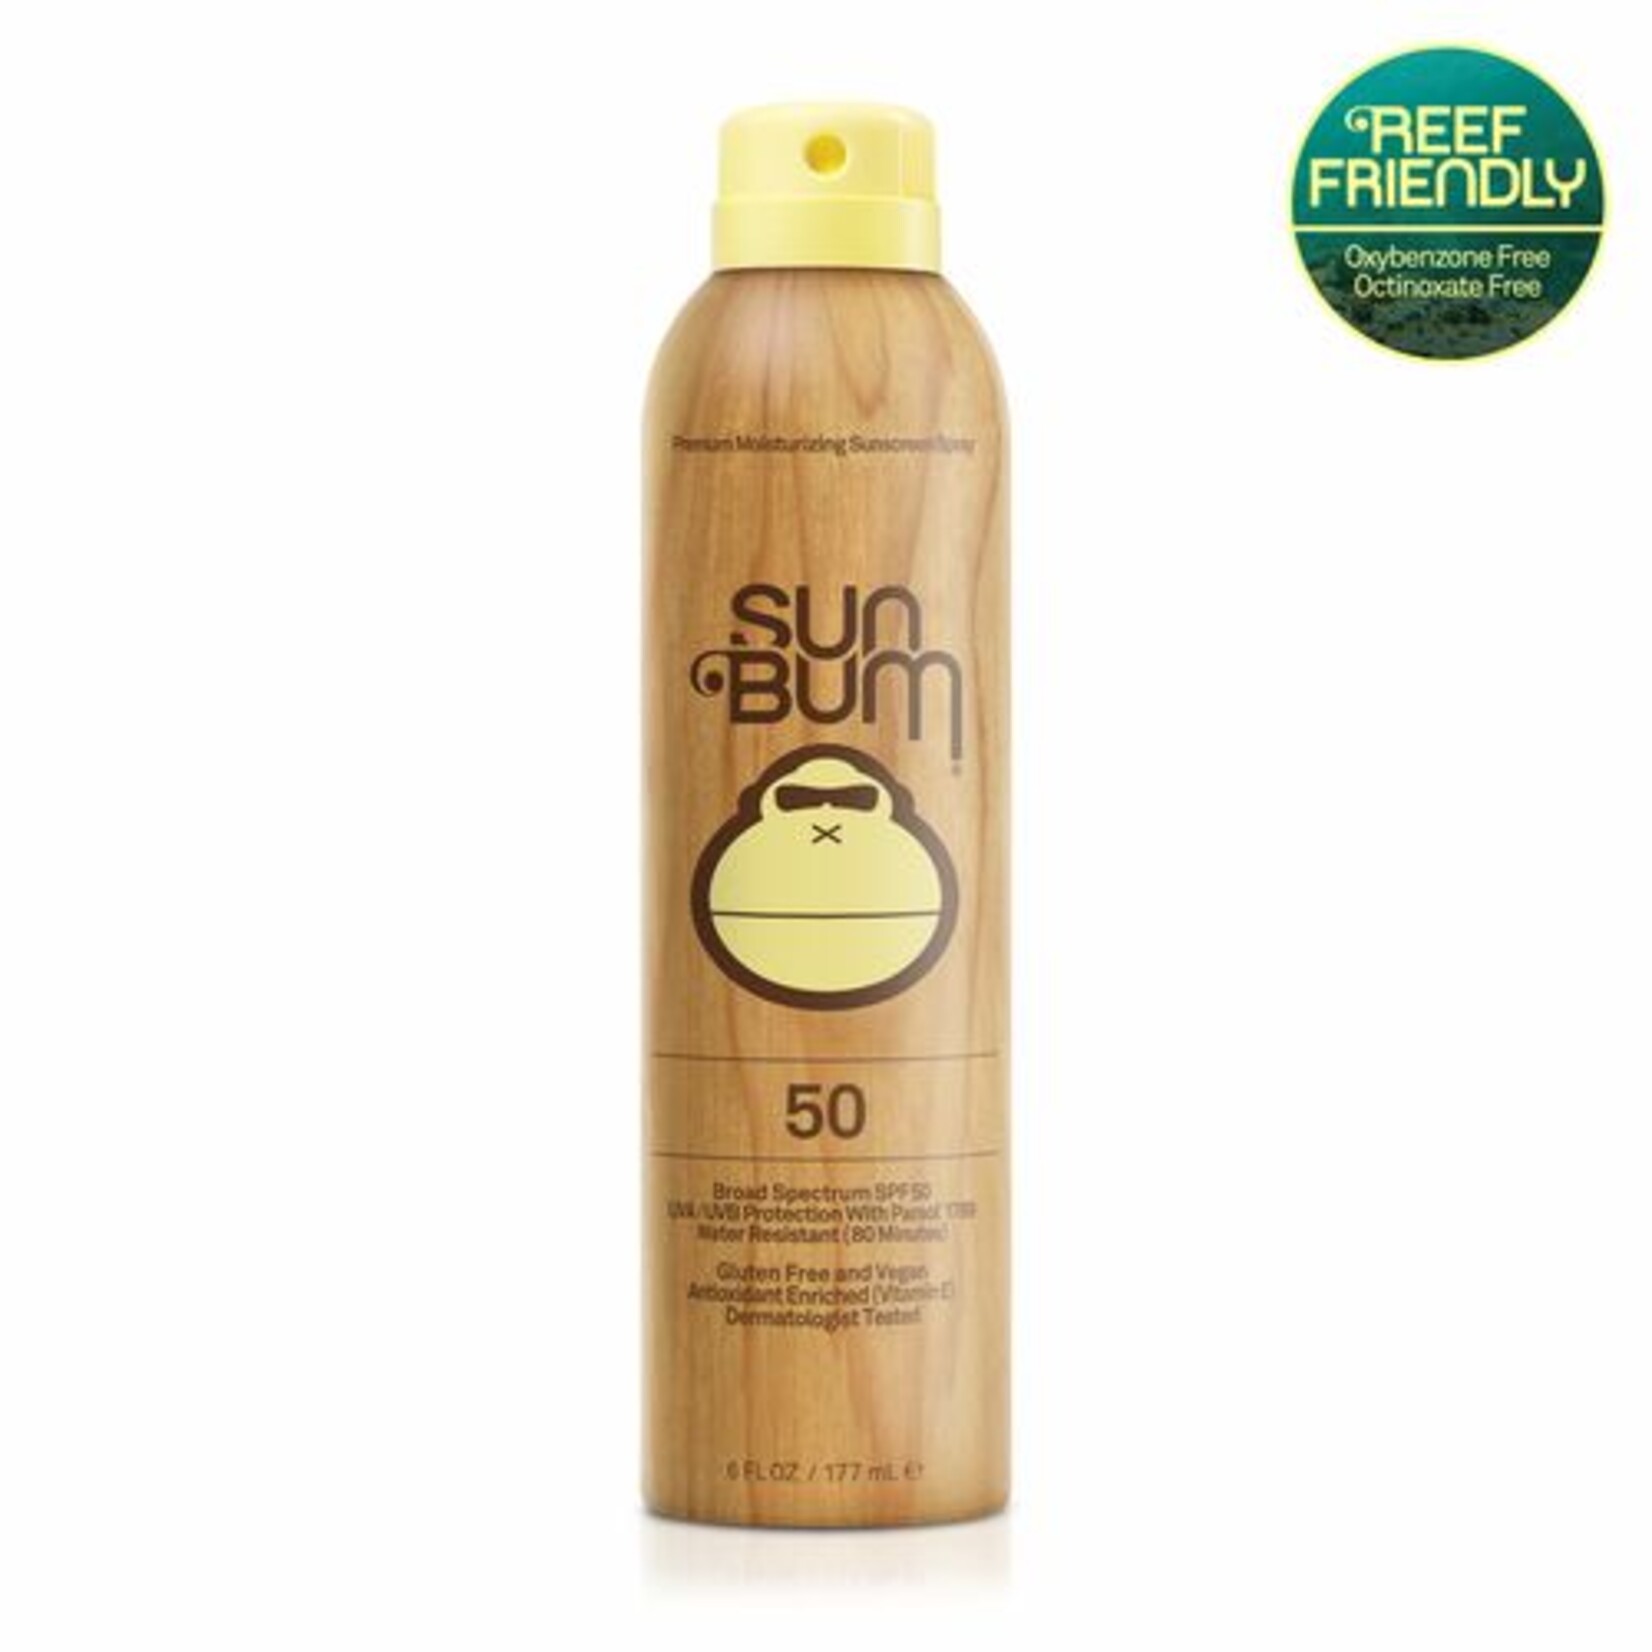 Sun Bum SunBum Spray SPF 50 6oz